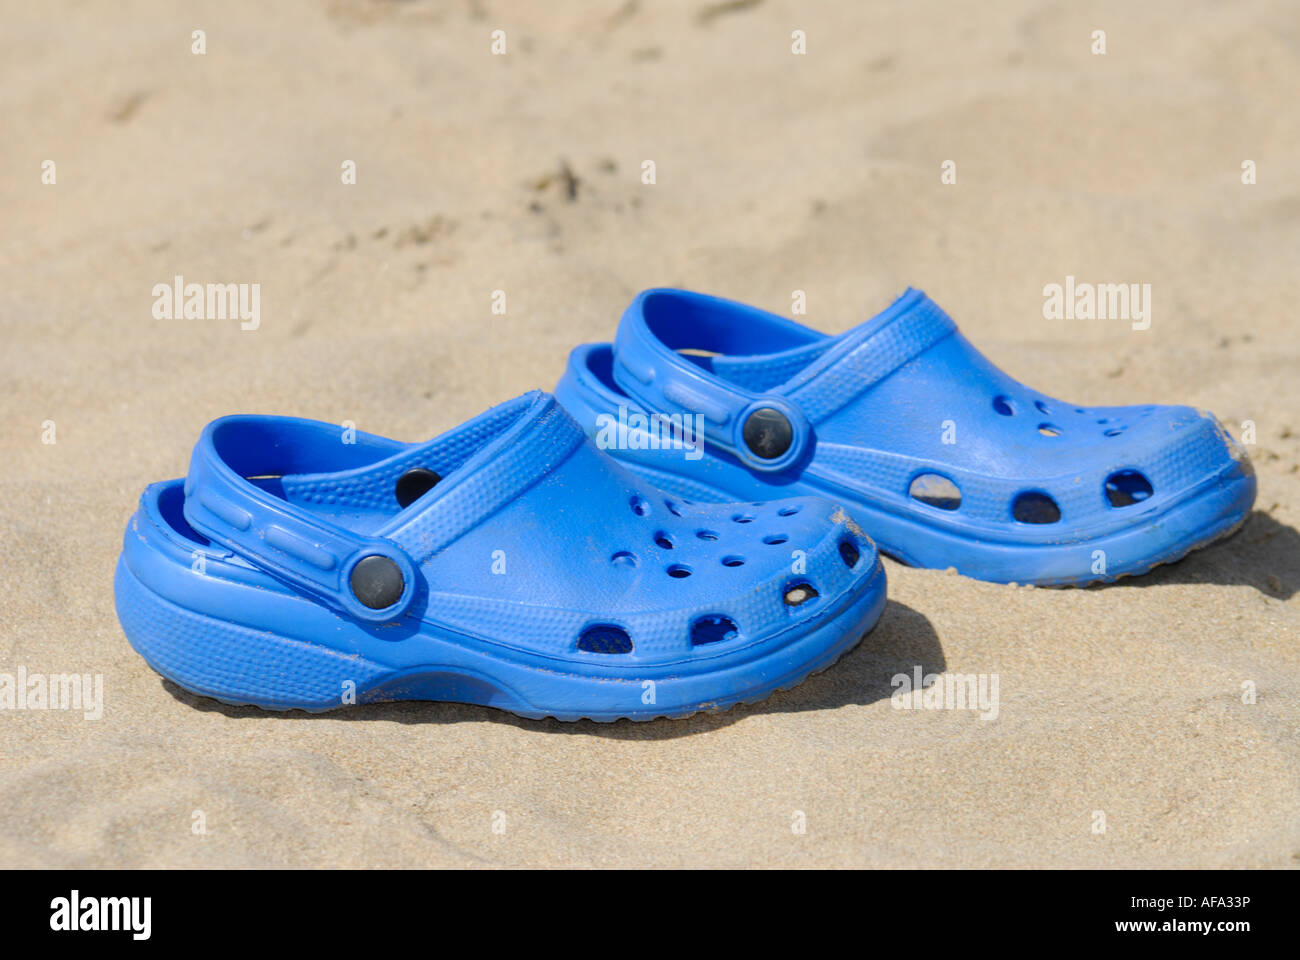 Pair of Crocs Beach Sandals Stock Photo - Alamy